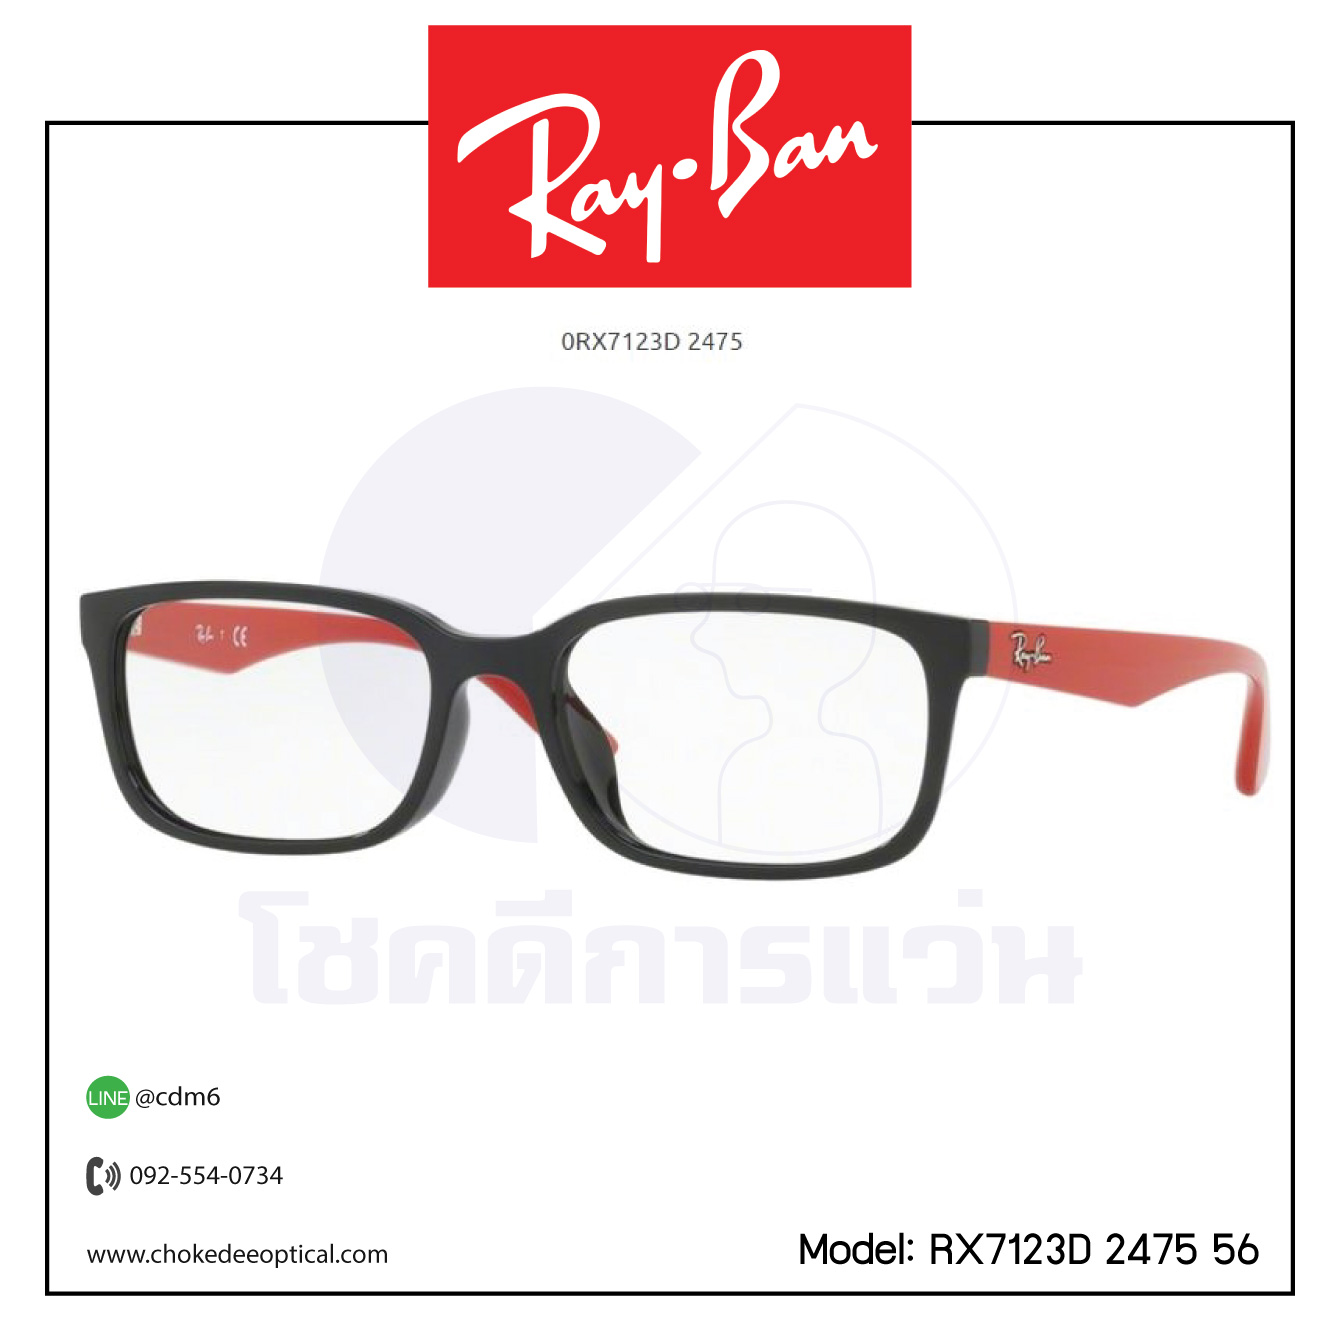 Rayban RX7123D 2475 56